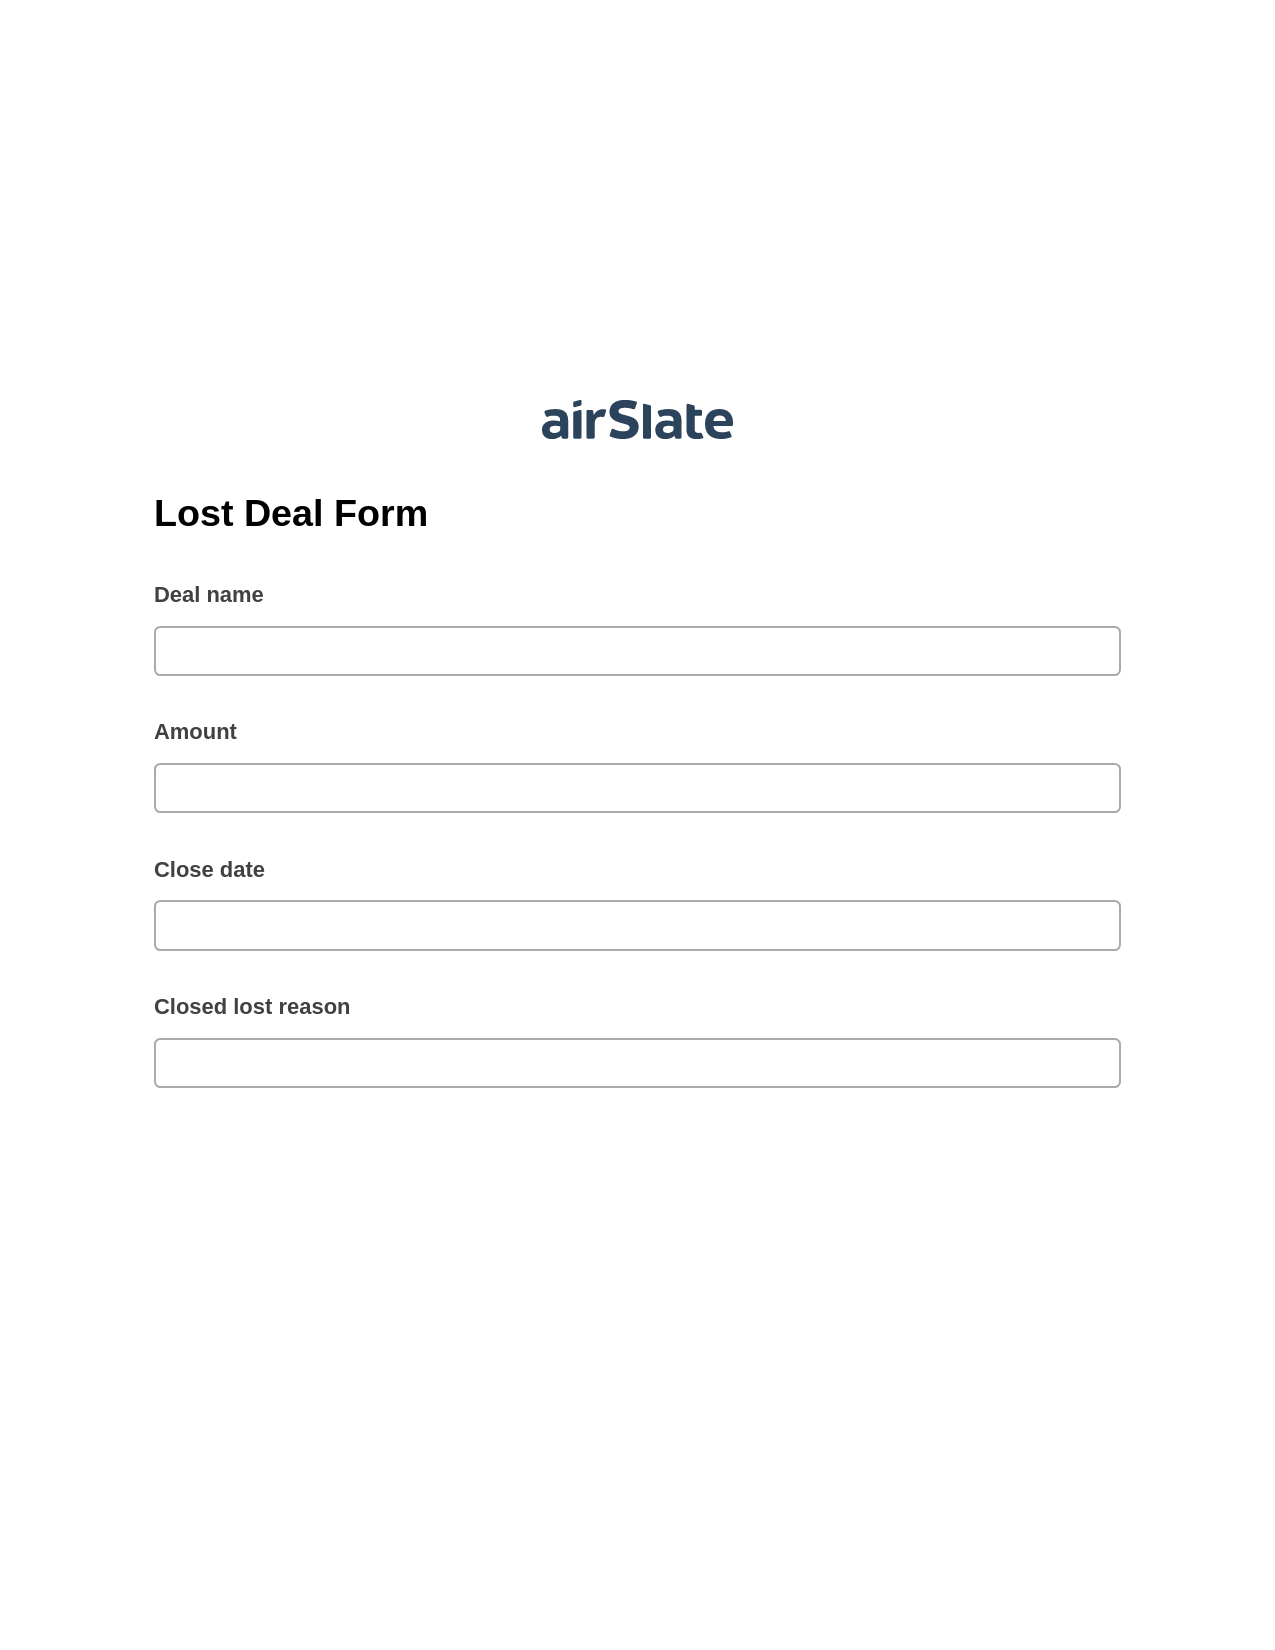 Lost Deal Form Pre-fill from CSV File Bot, Webhook Bot, Webhook Postfinish Bot